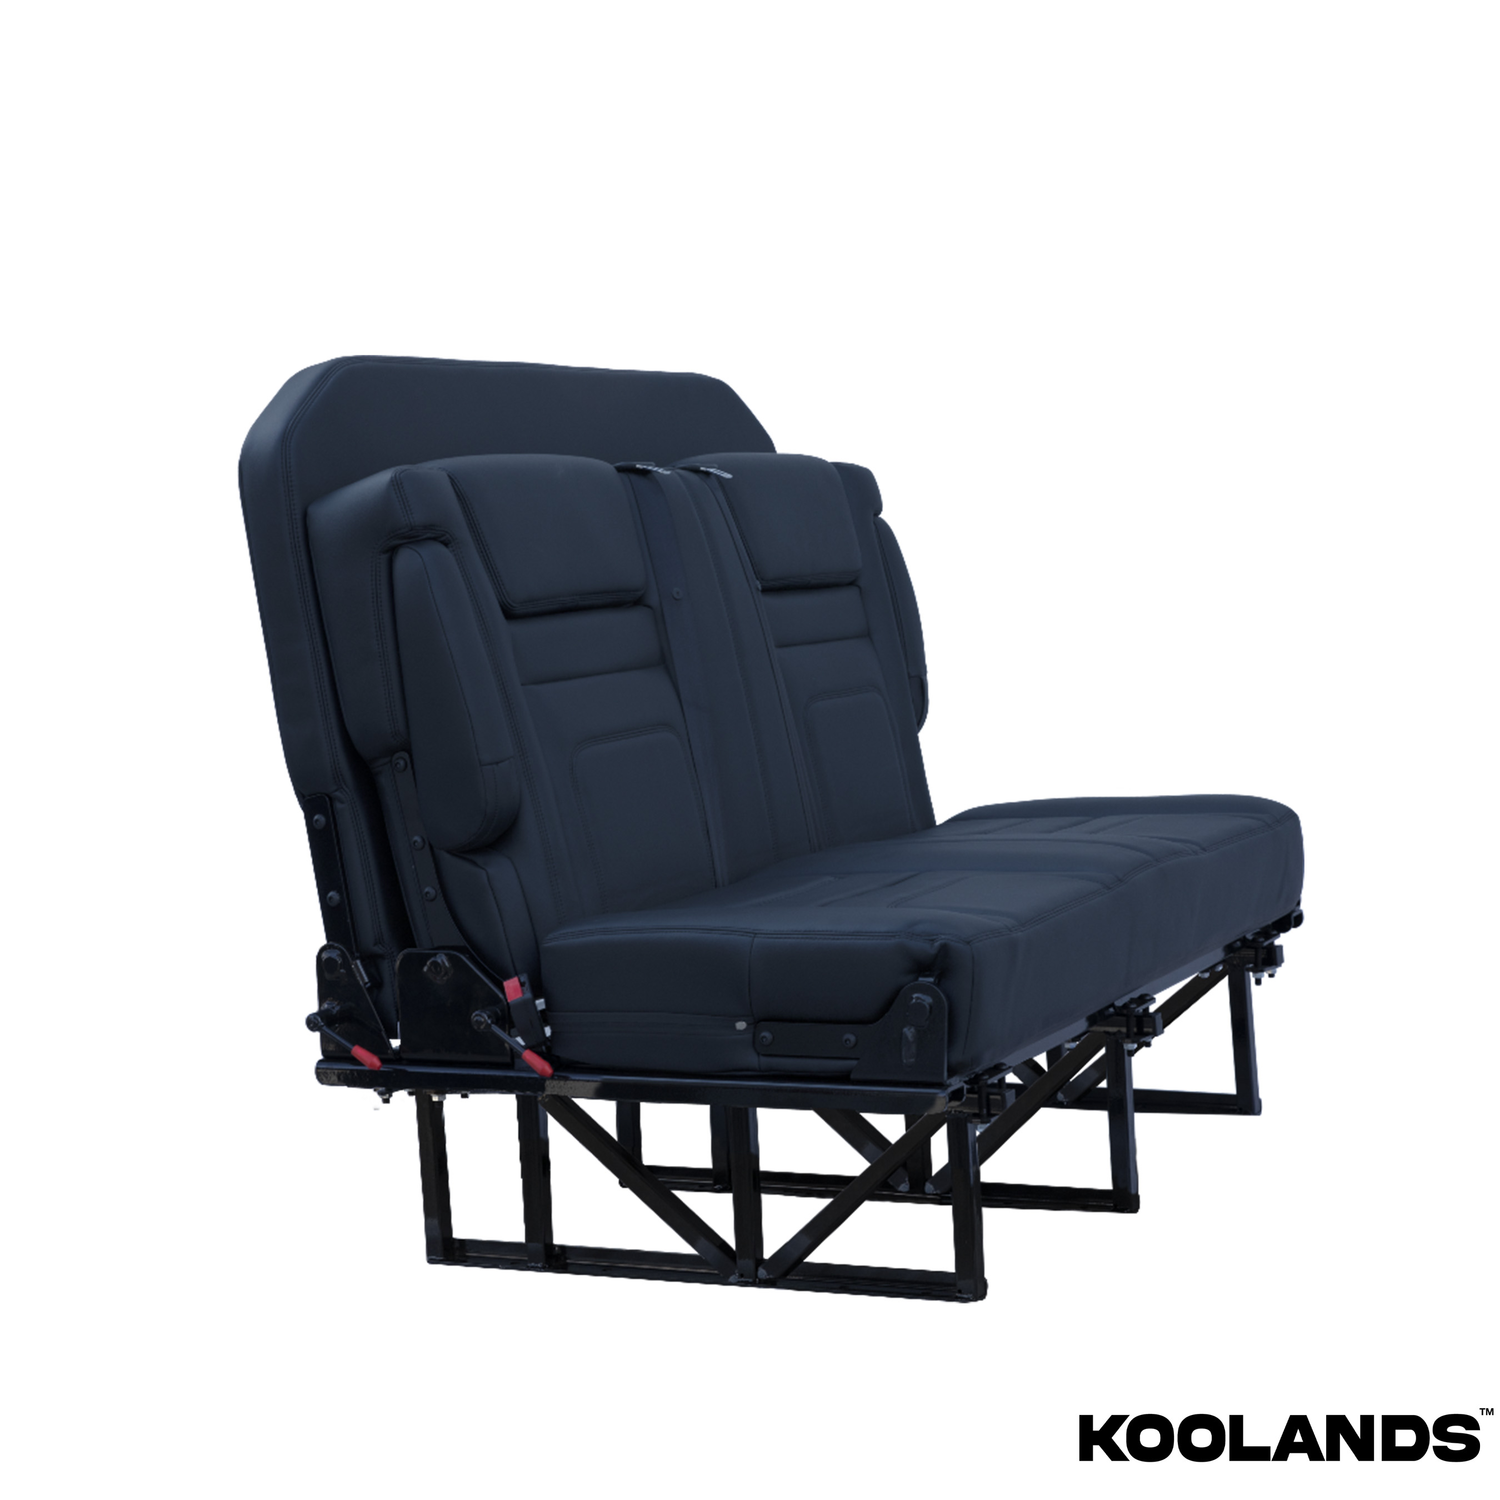 Koolands Seat Beds